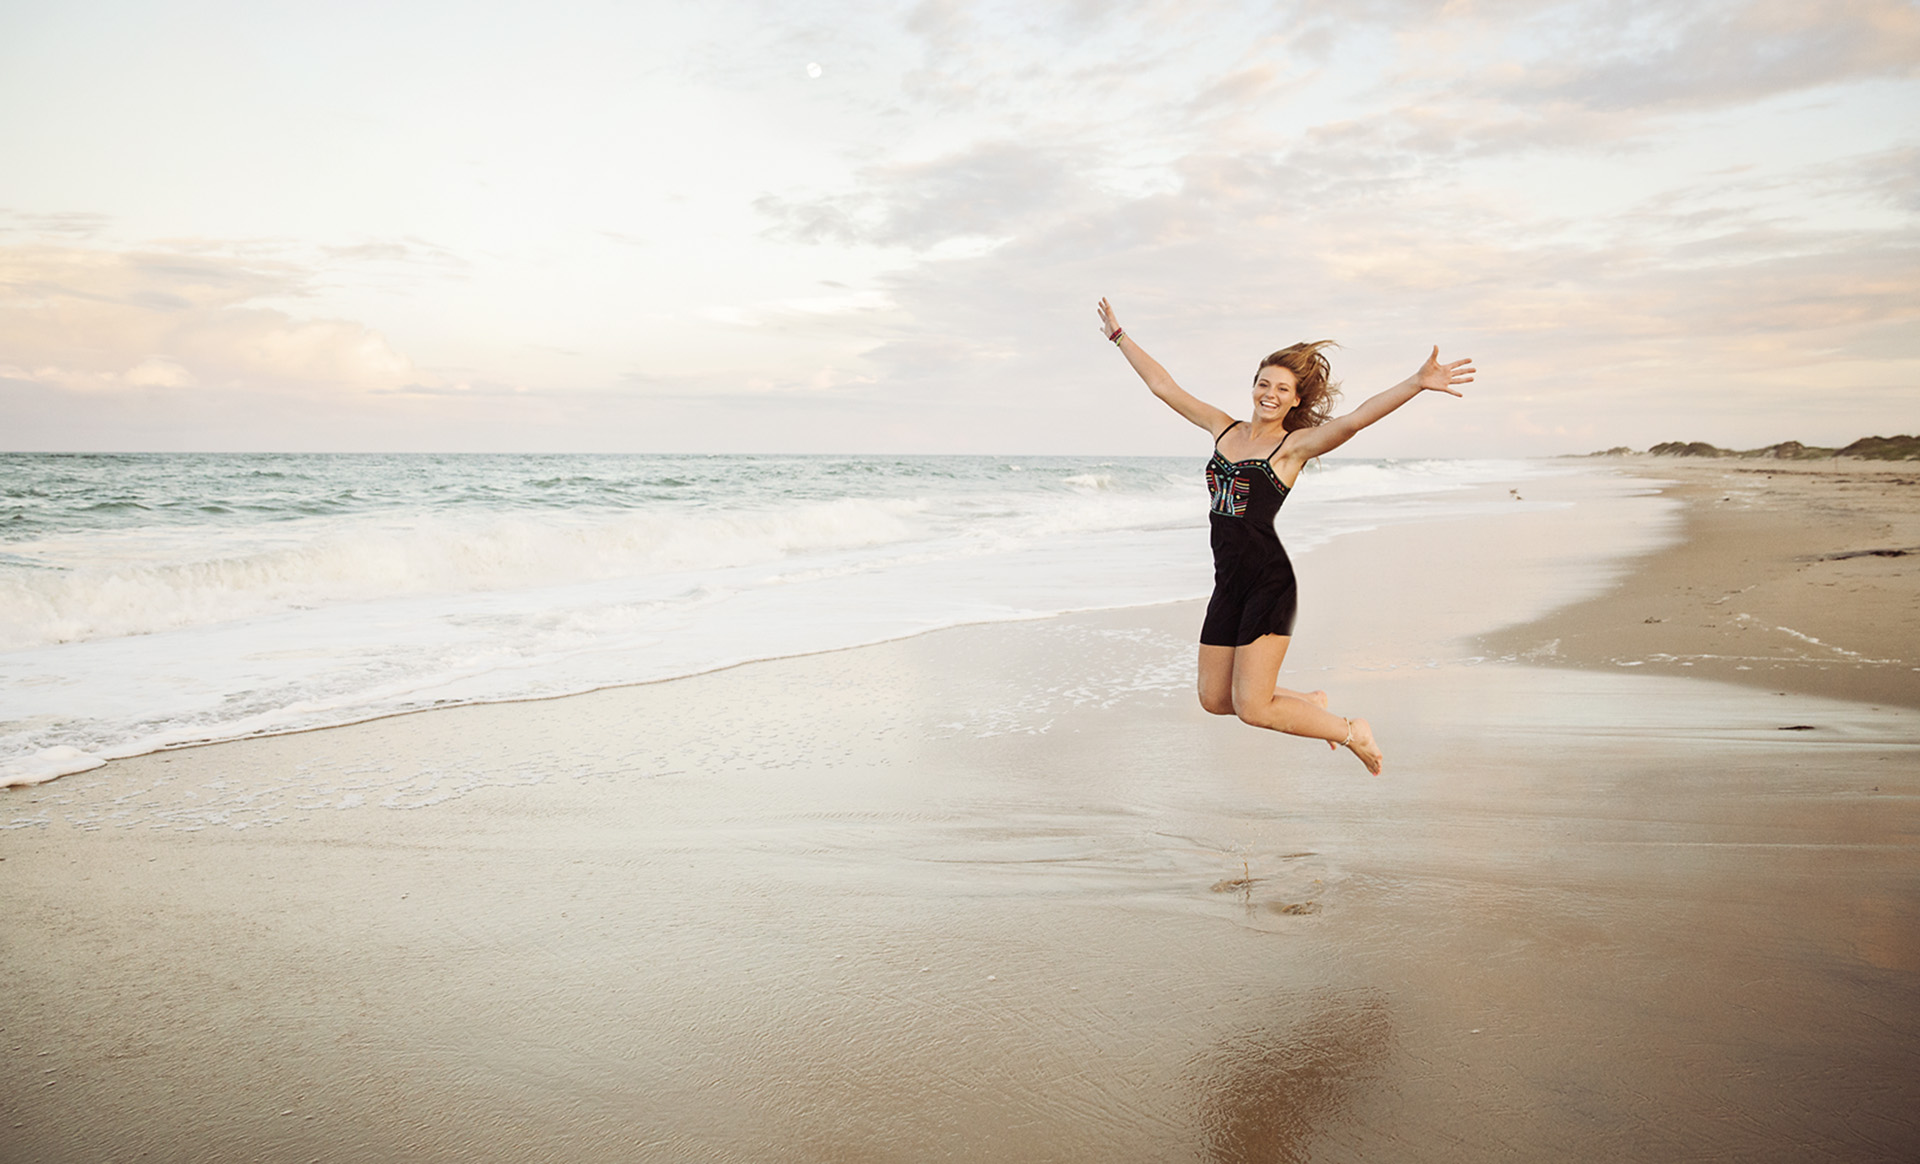 Senior girl jumping by the ocean